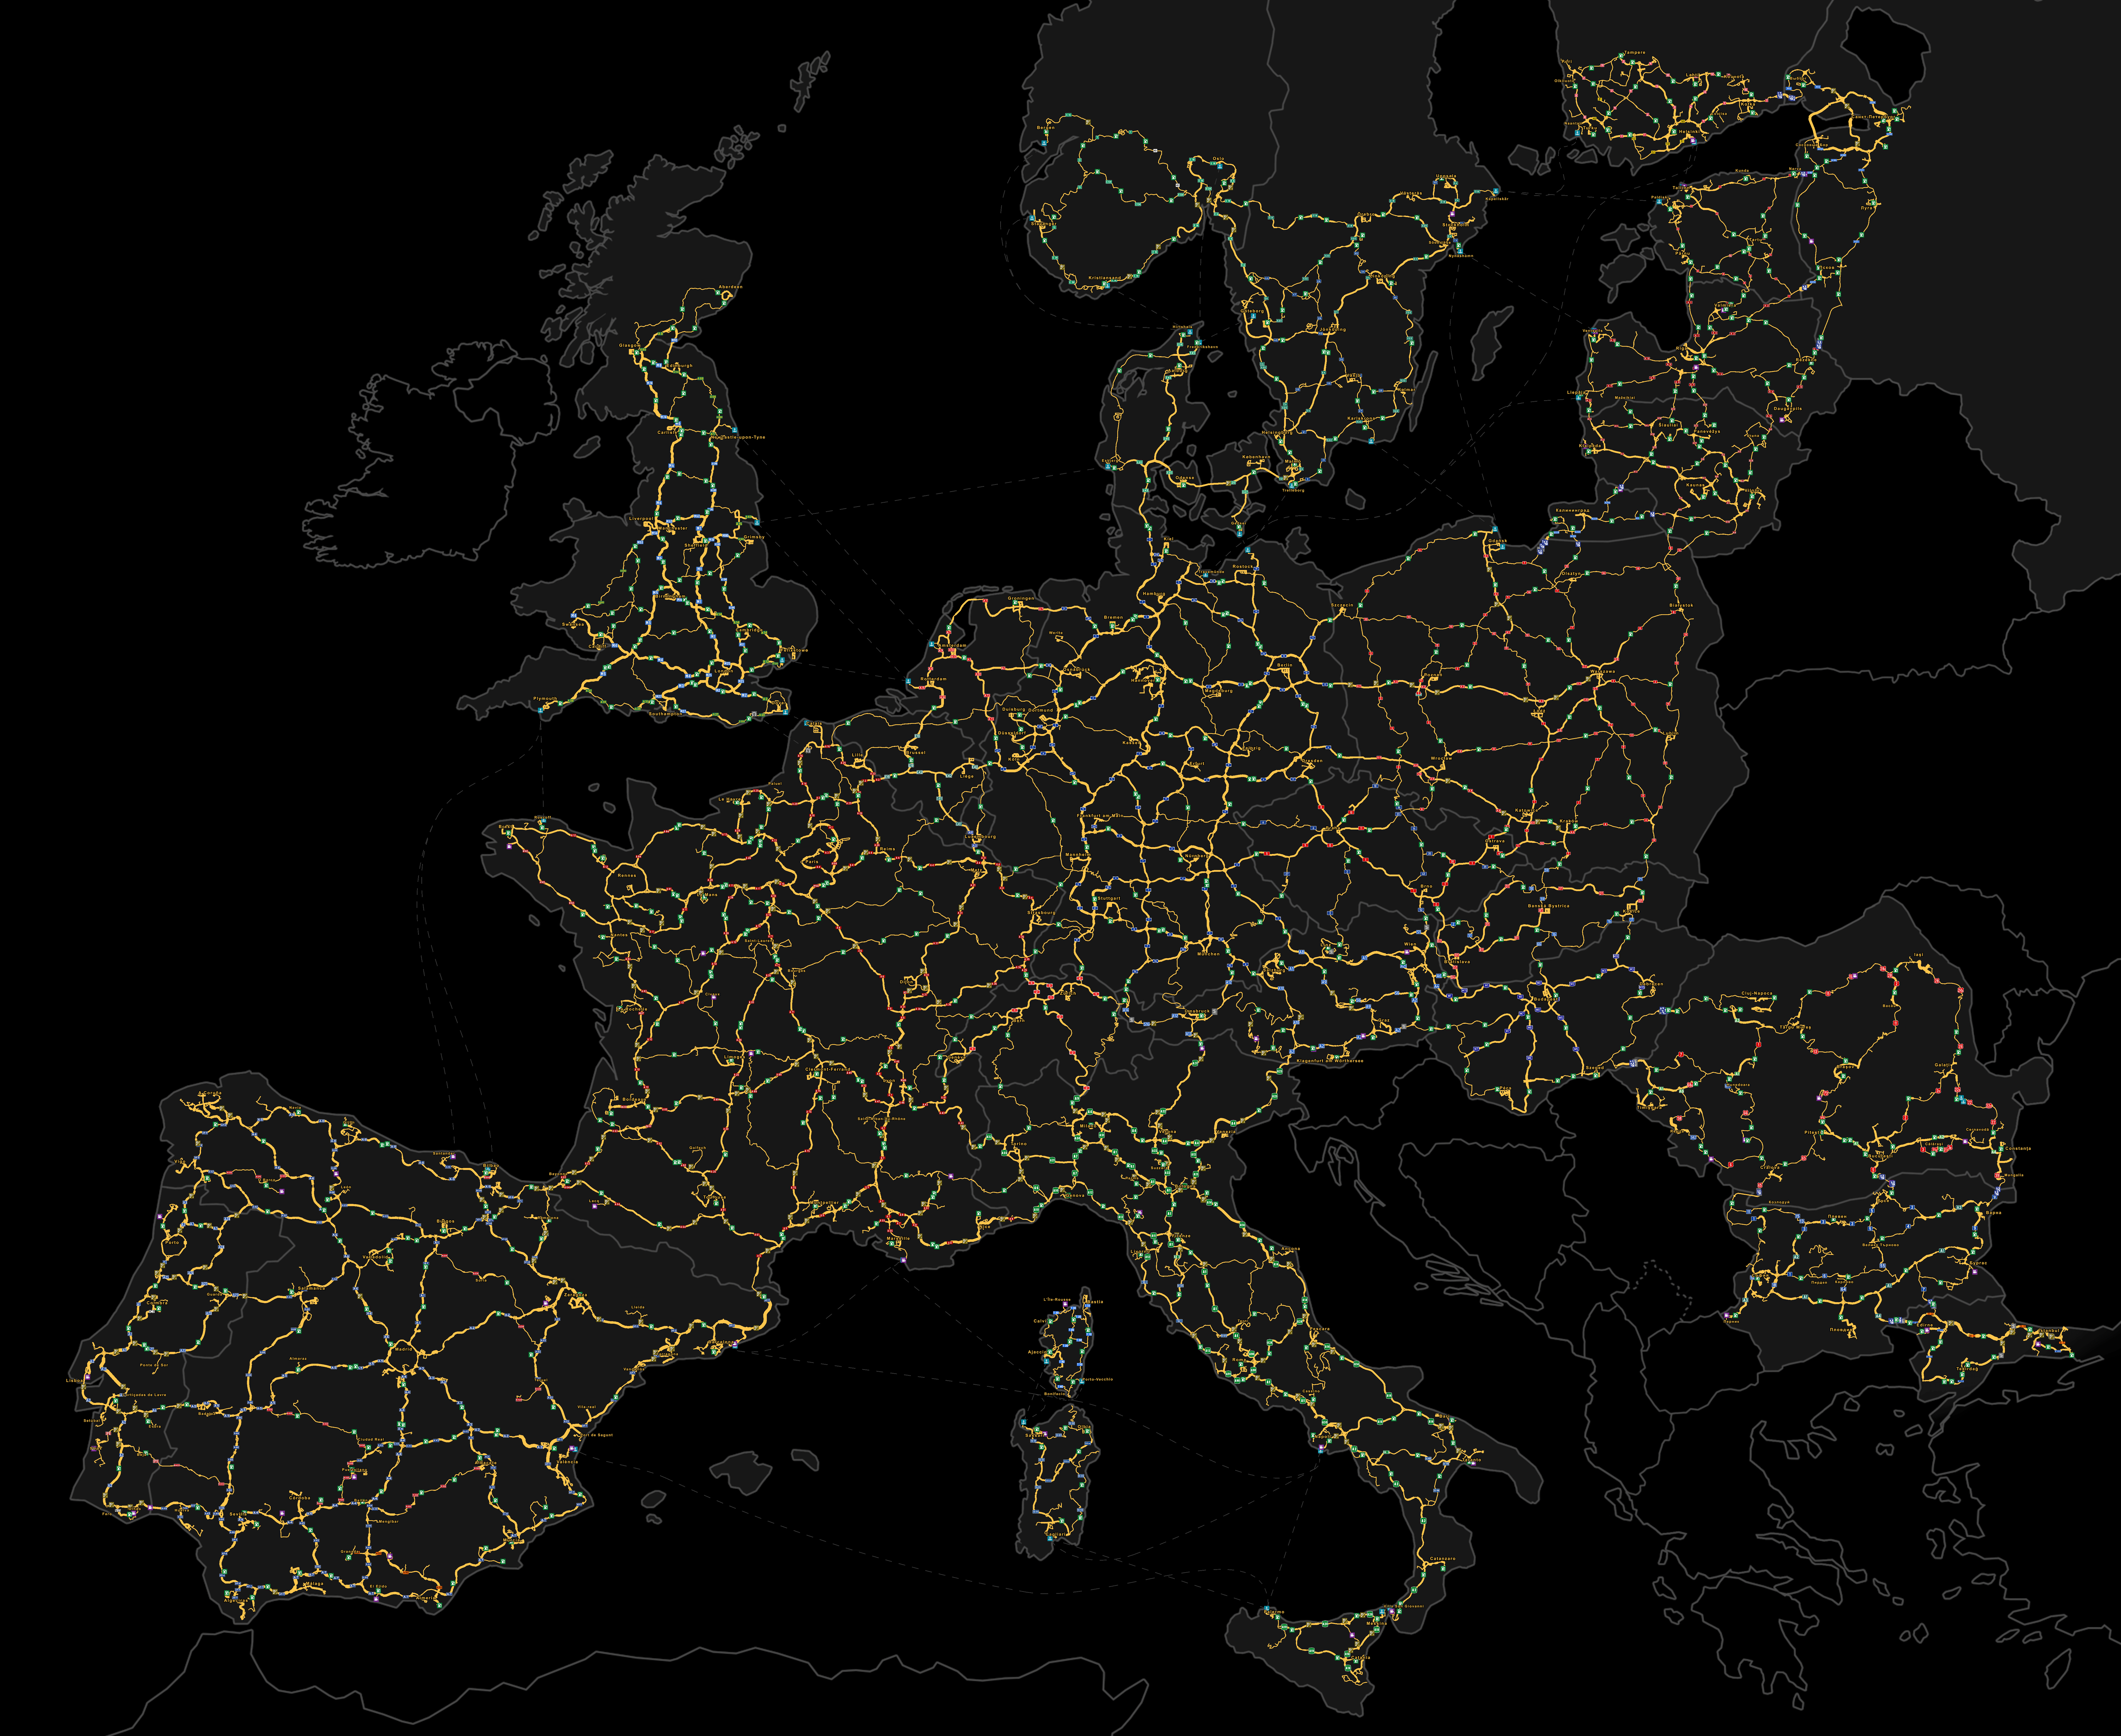 euro truck simulator 1 maps